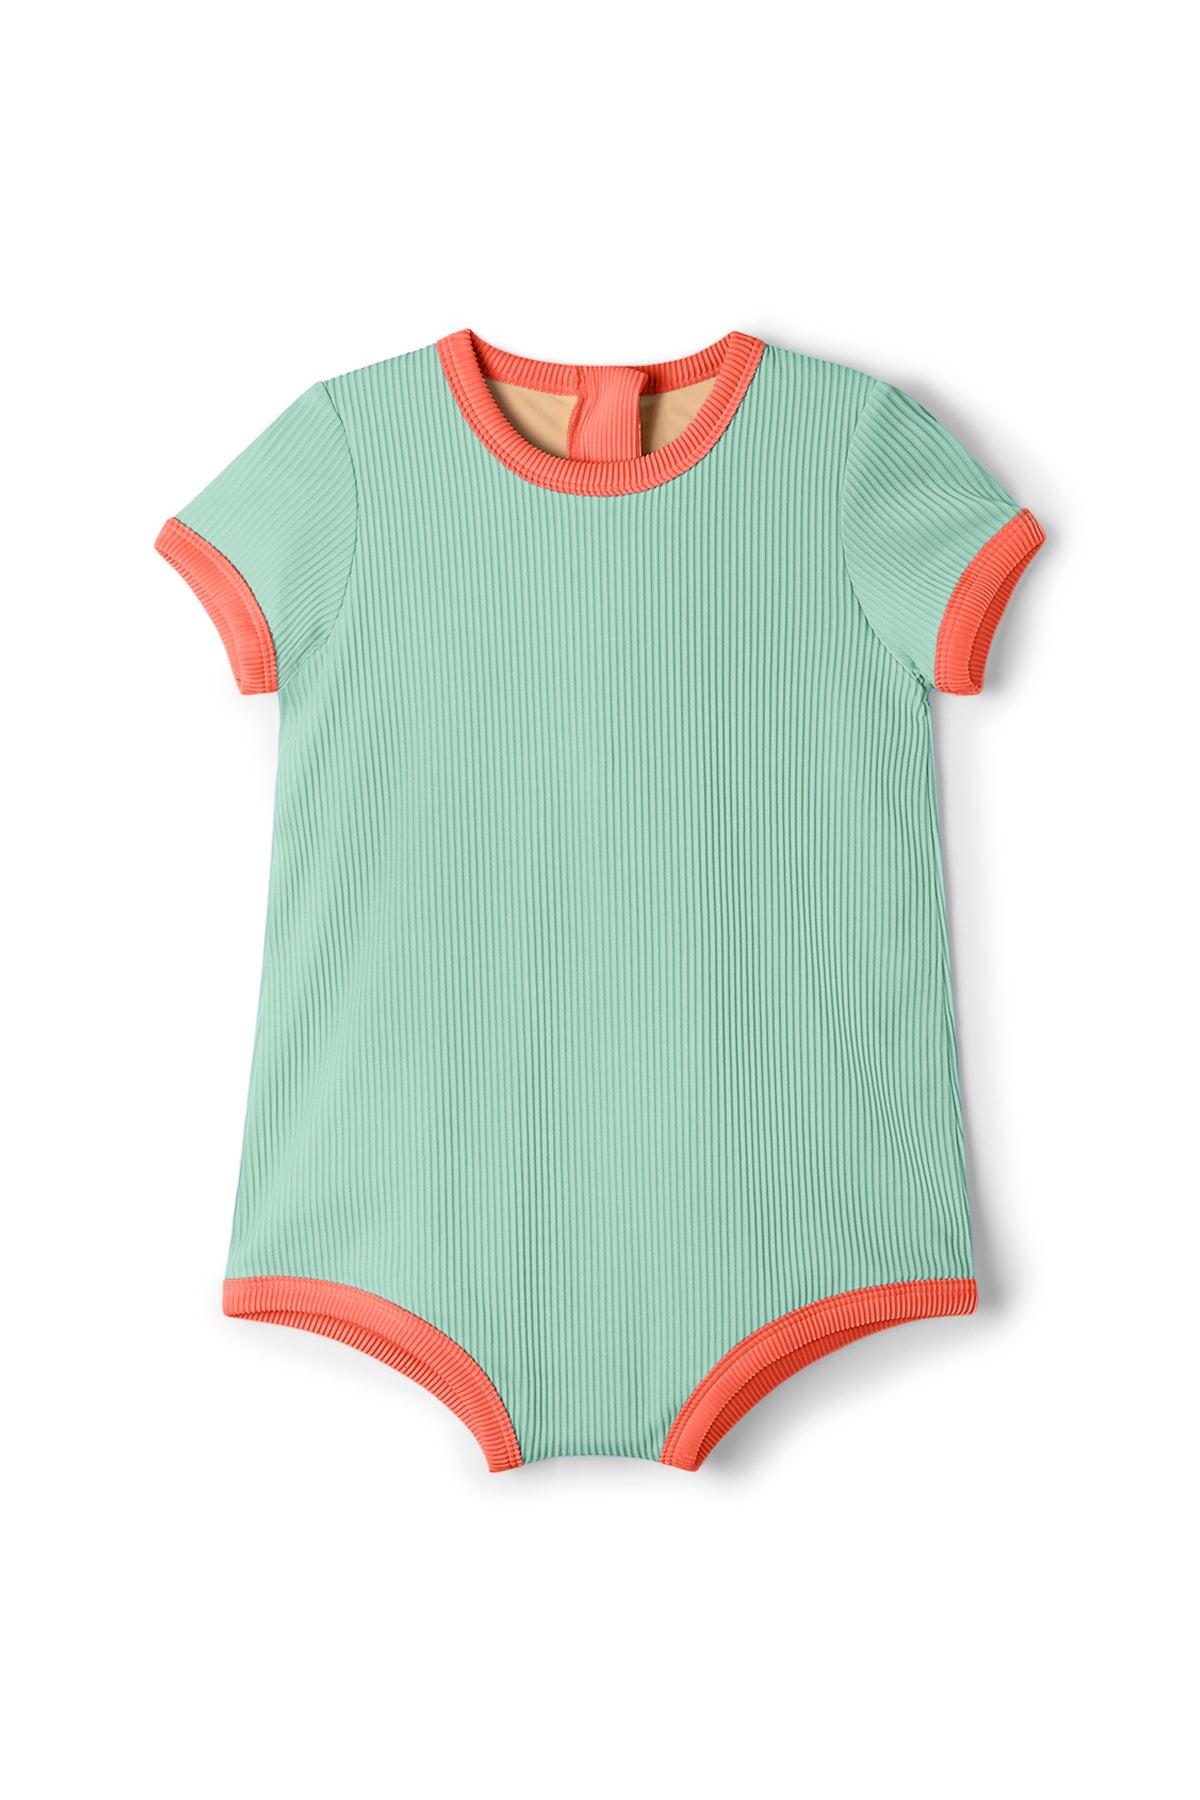 zulu & zephyr mini infant onesie - turquoise